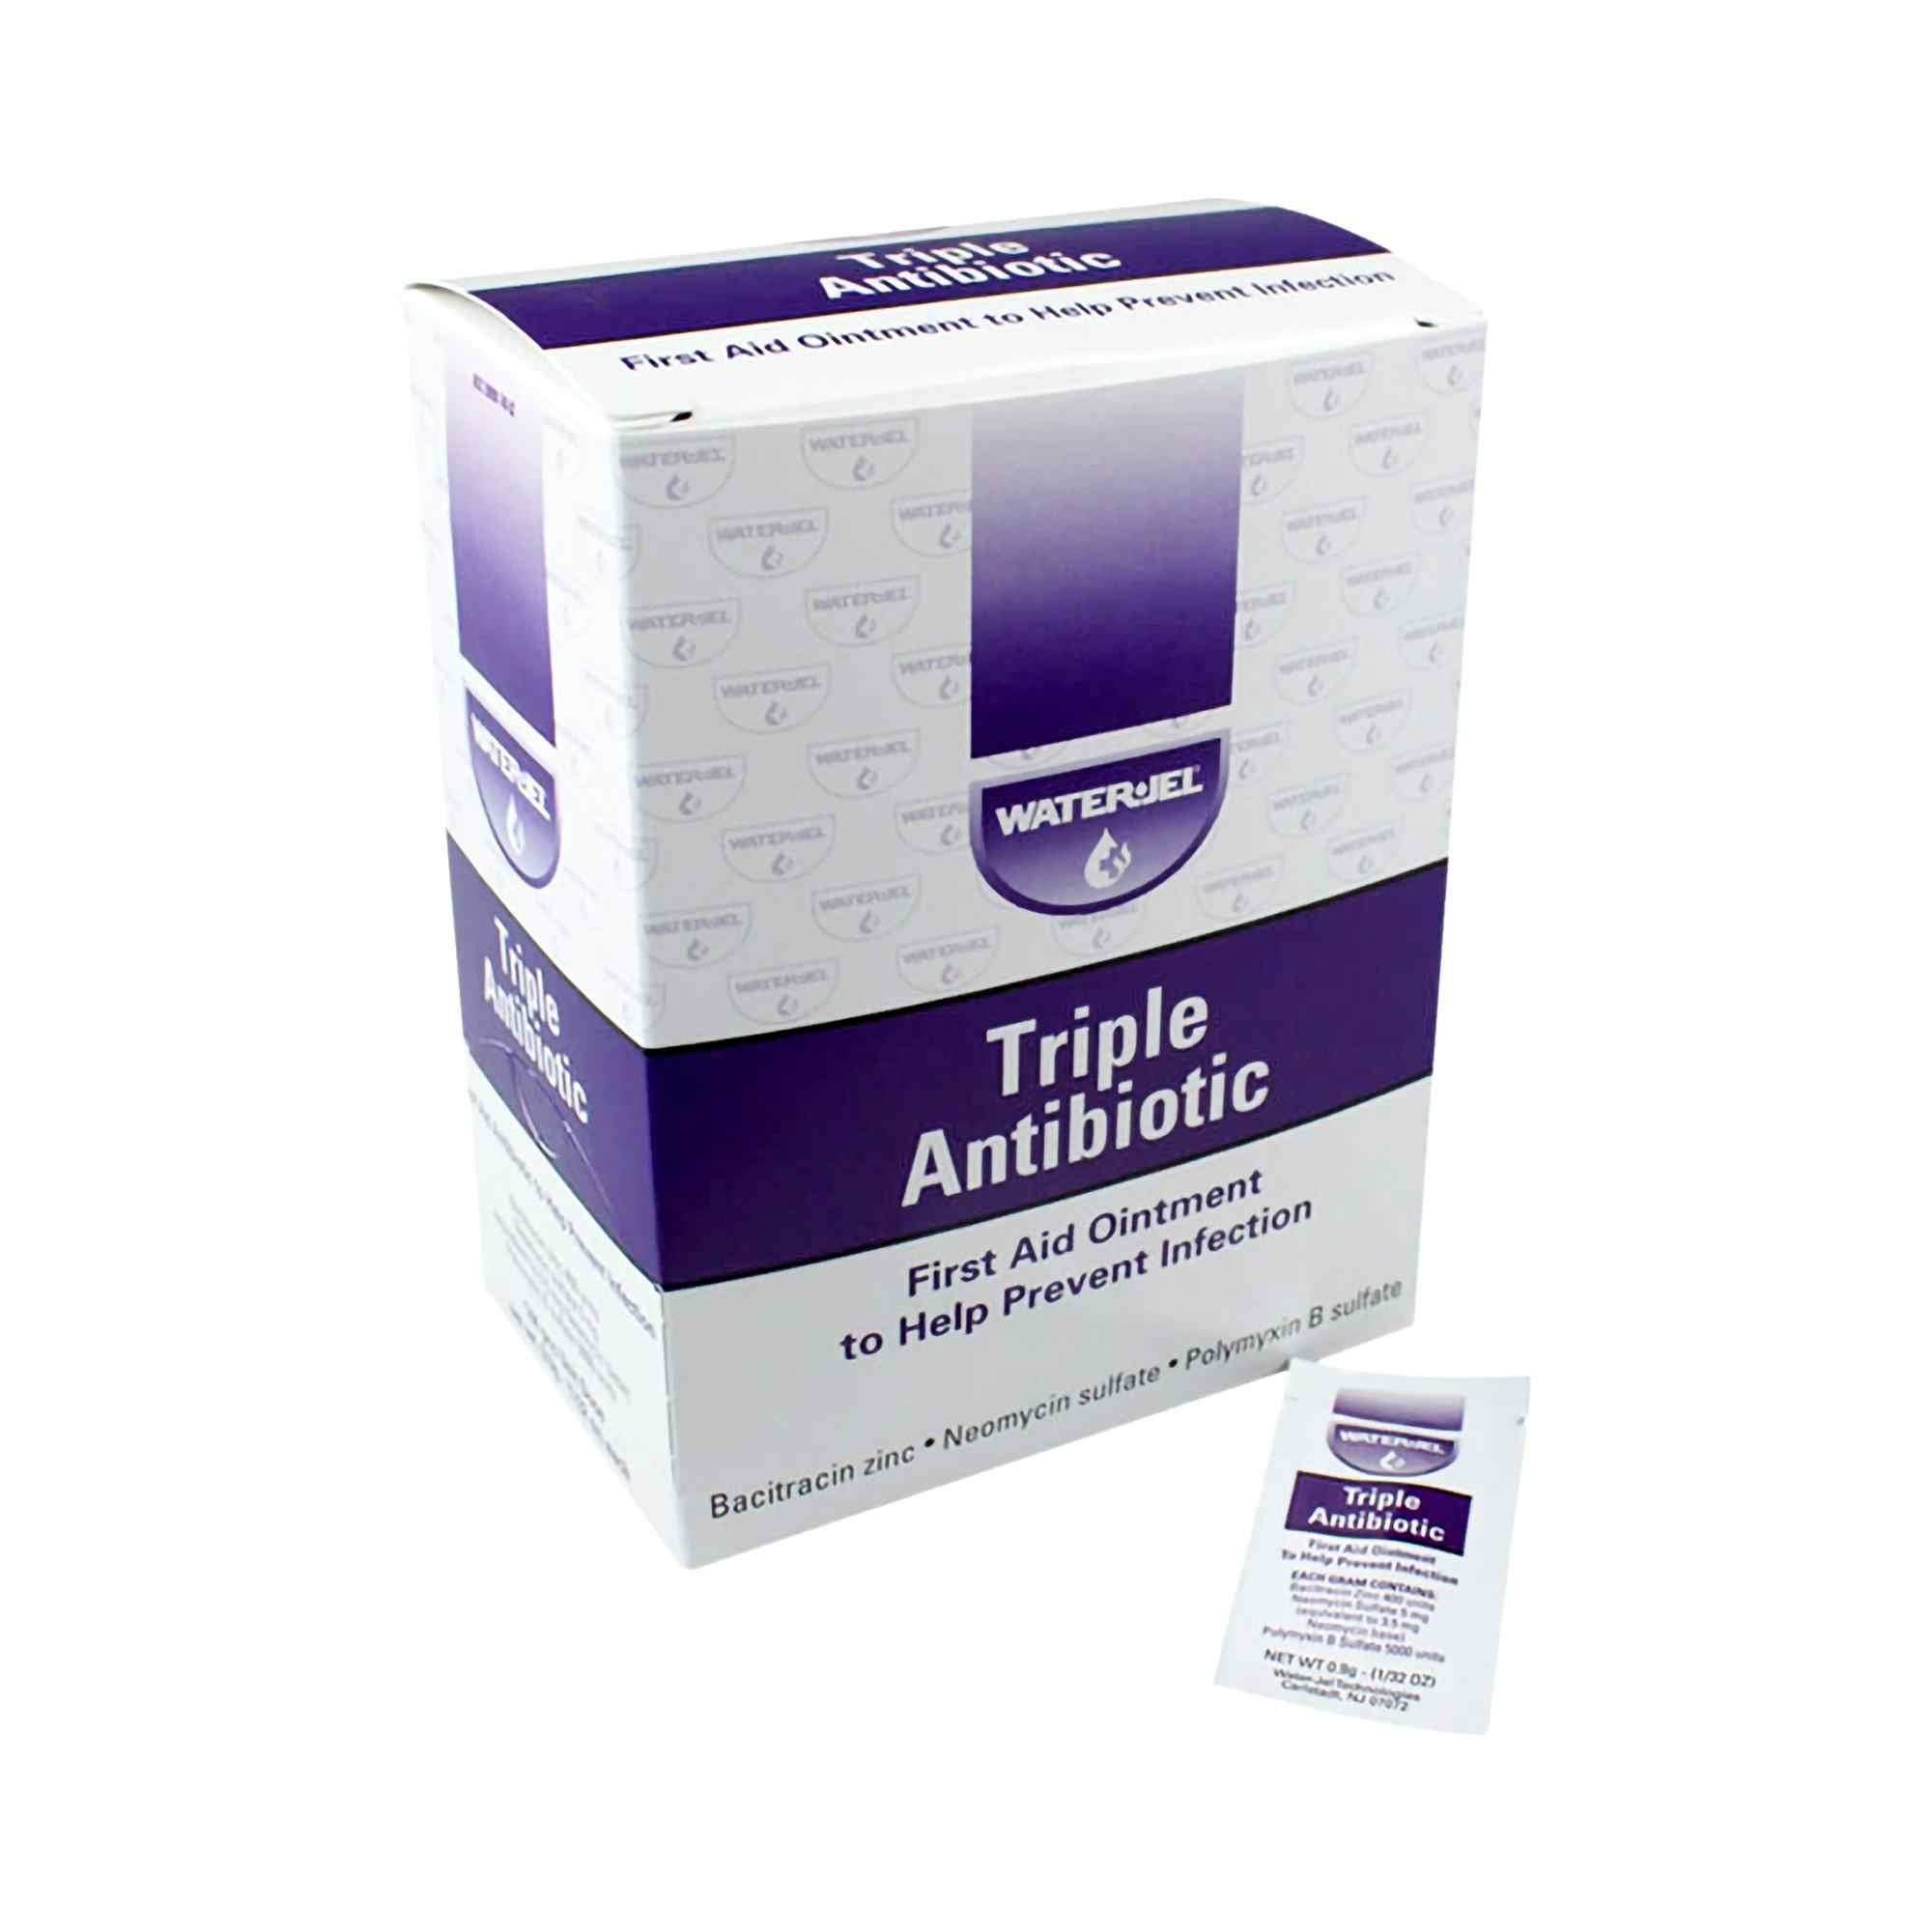 Water-Jel Triple Antibiotic First Aid Ointment, WJTA1728, Box of 144